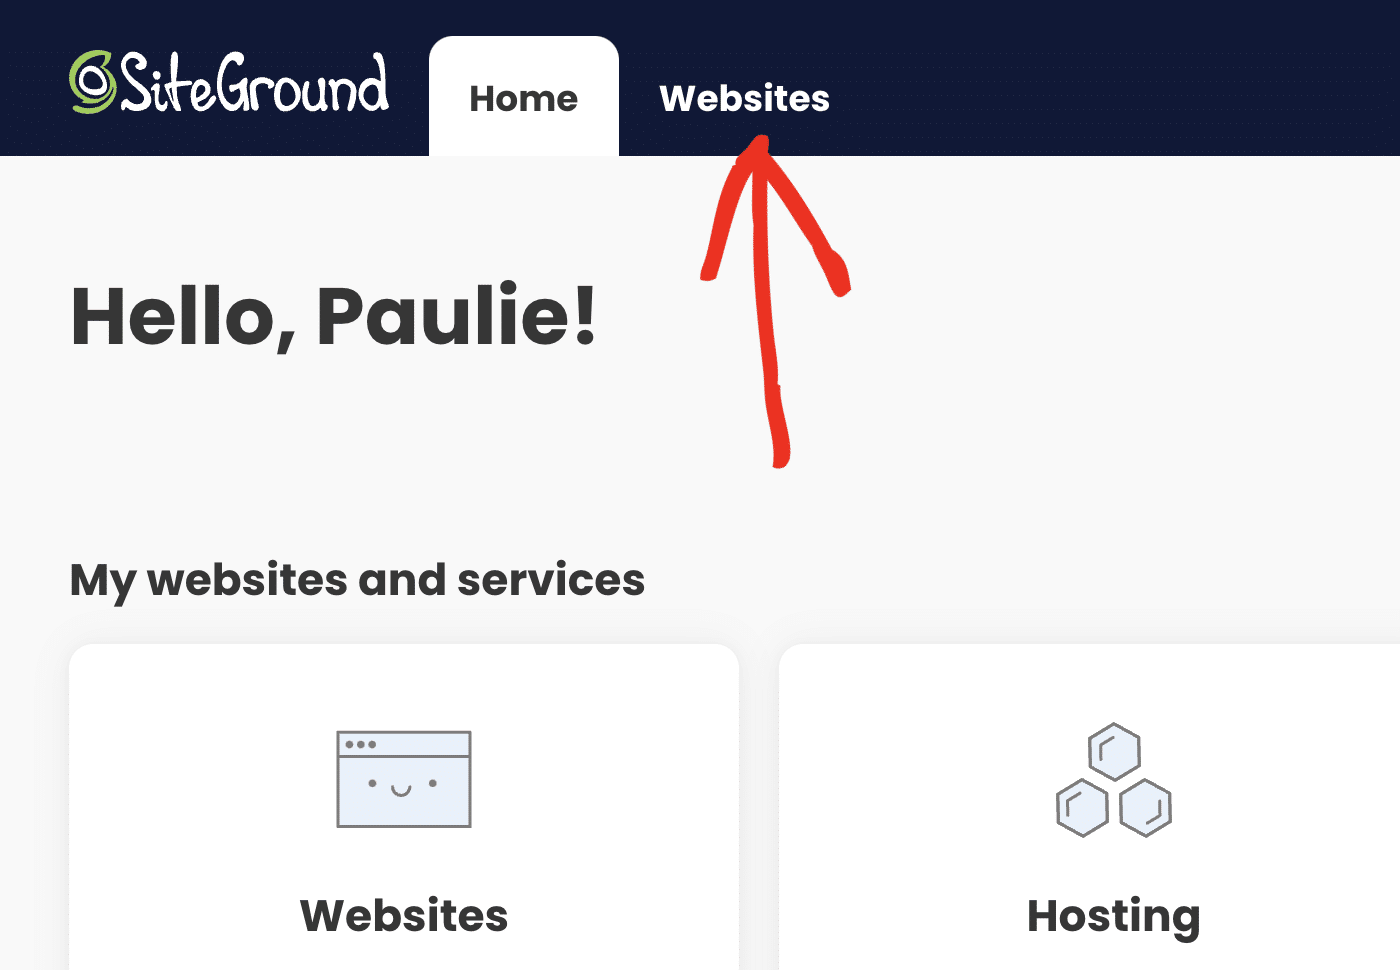 Select Websites tab